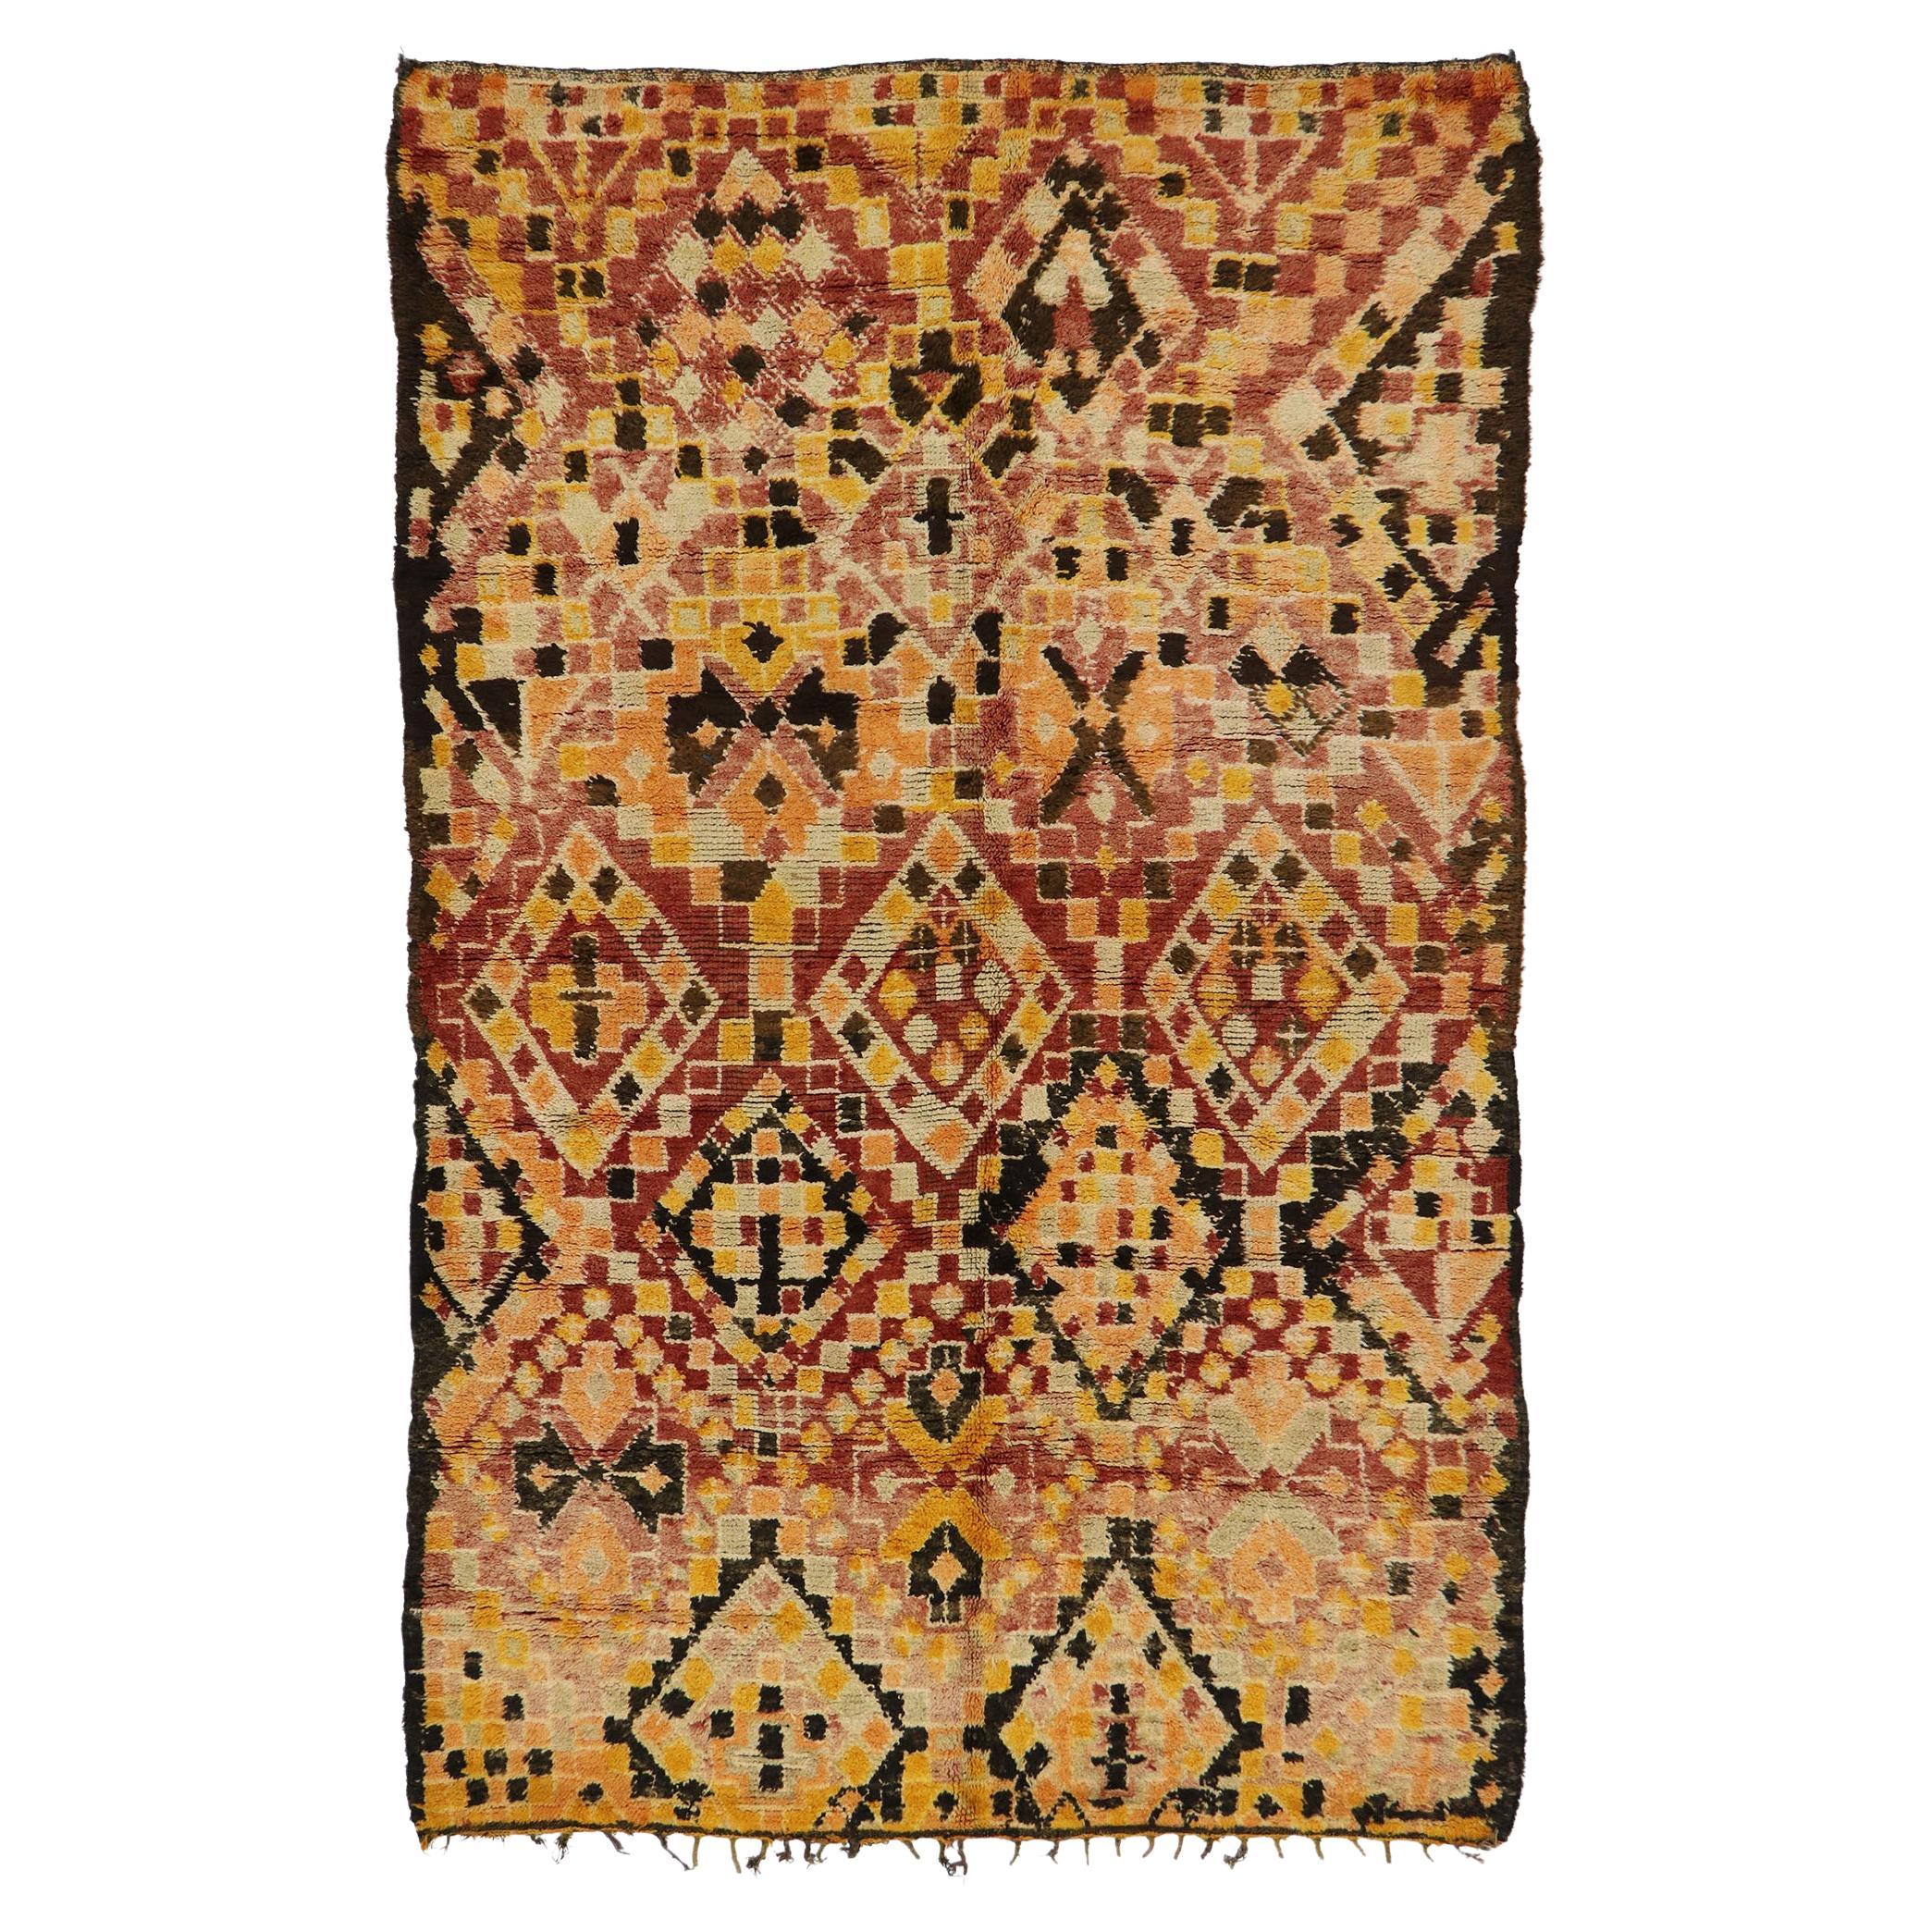 Marokkanischer Beni MGuild Vintage-Teppich, Global Style Meets Eclectic Boho Chic